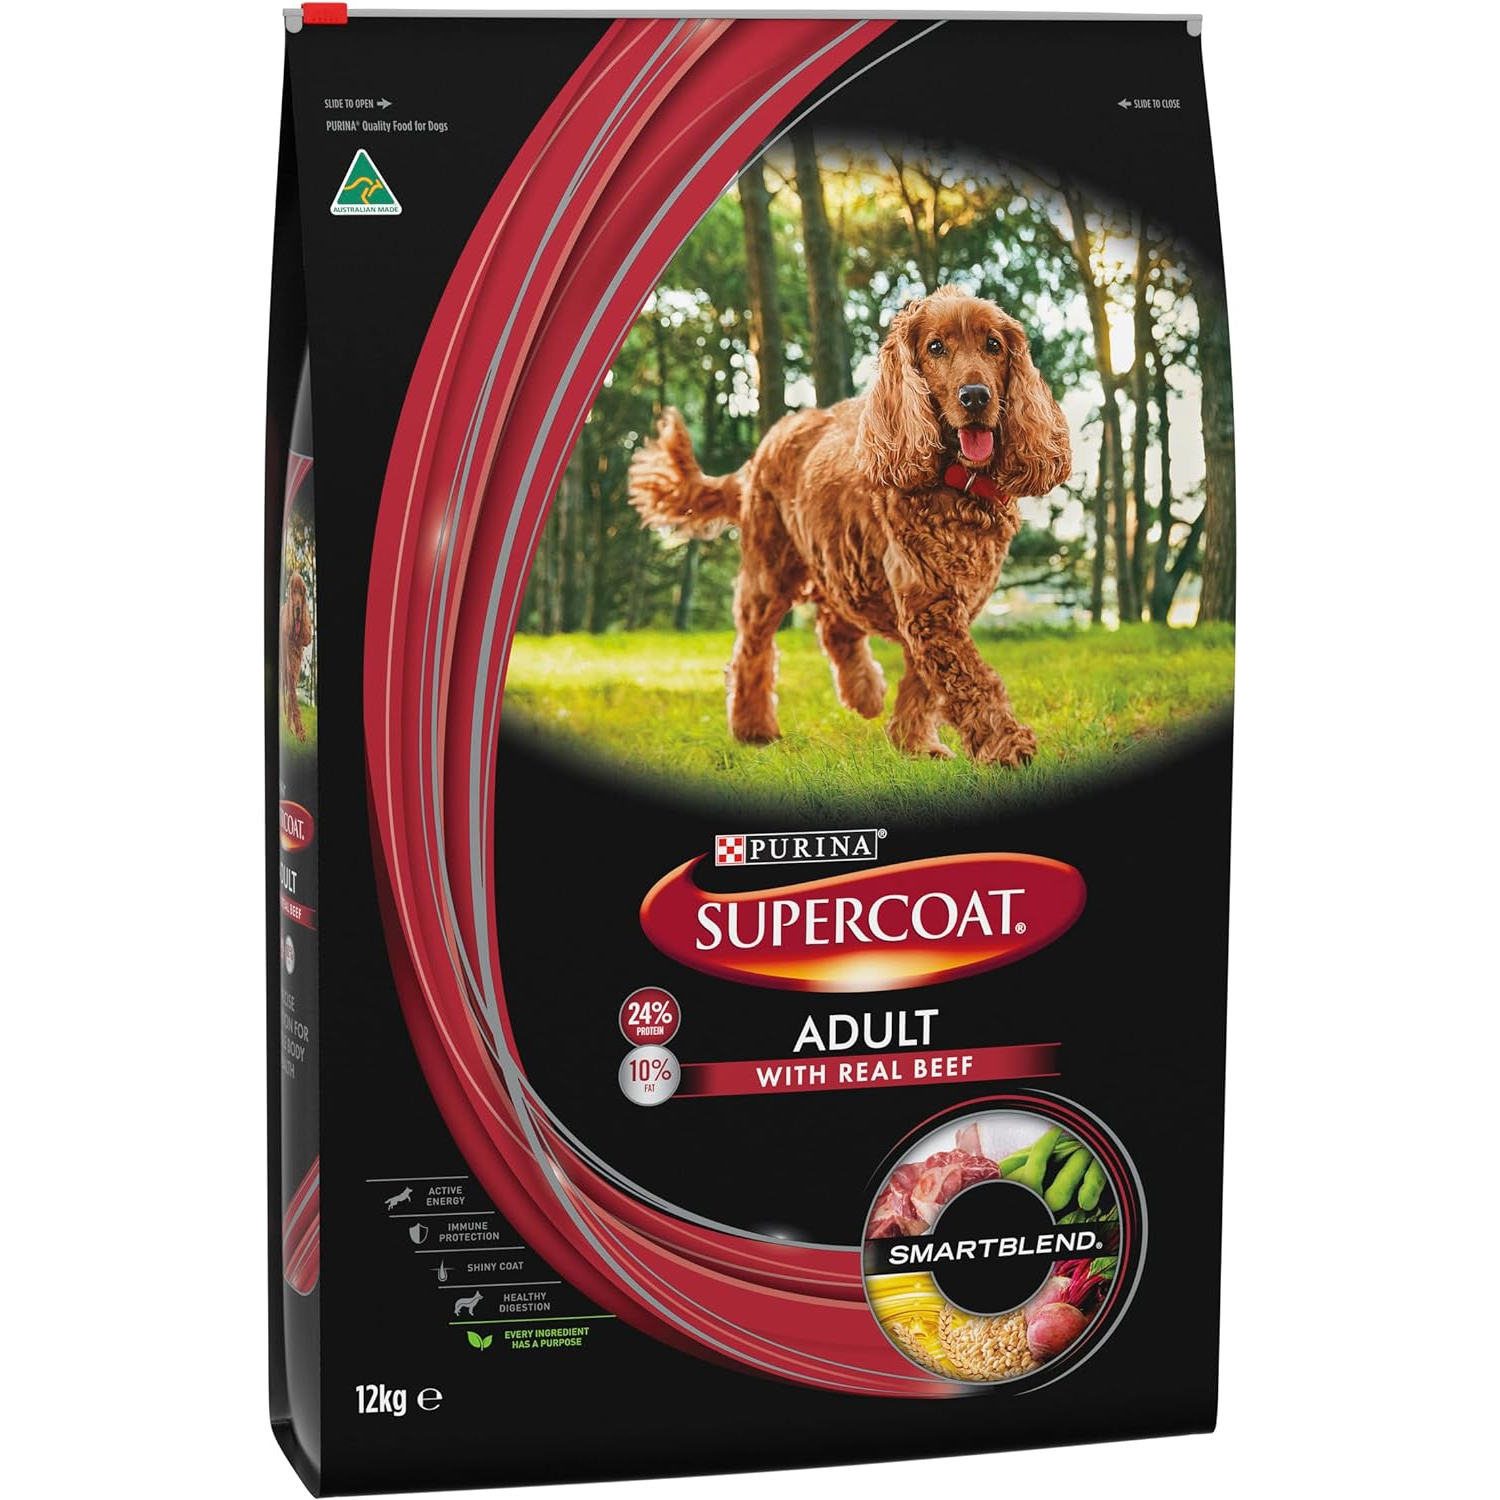 Purina Supercoat Adult Dog Food